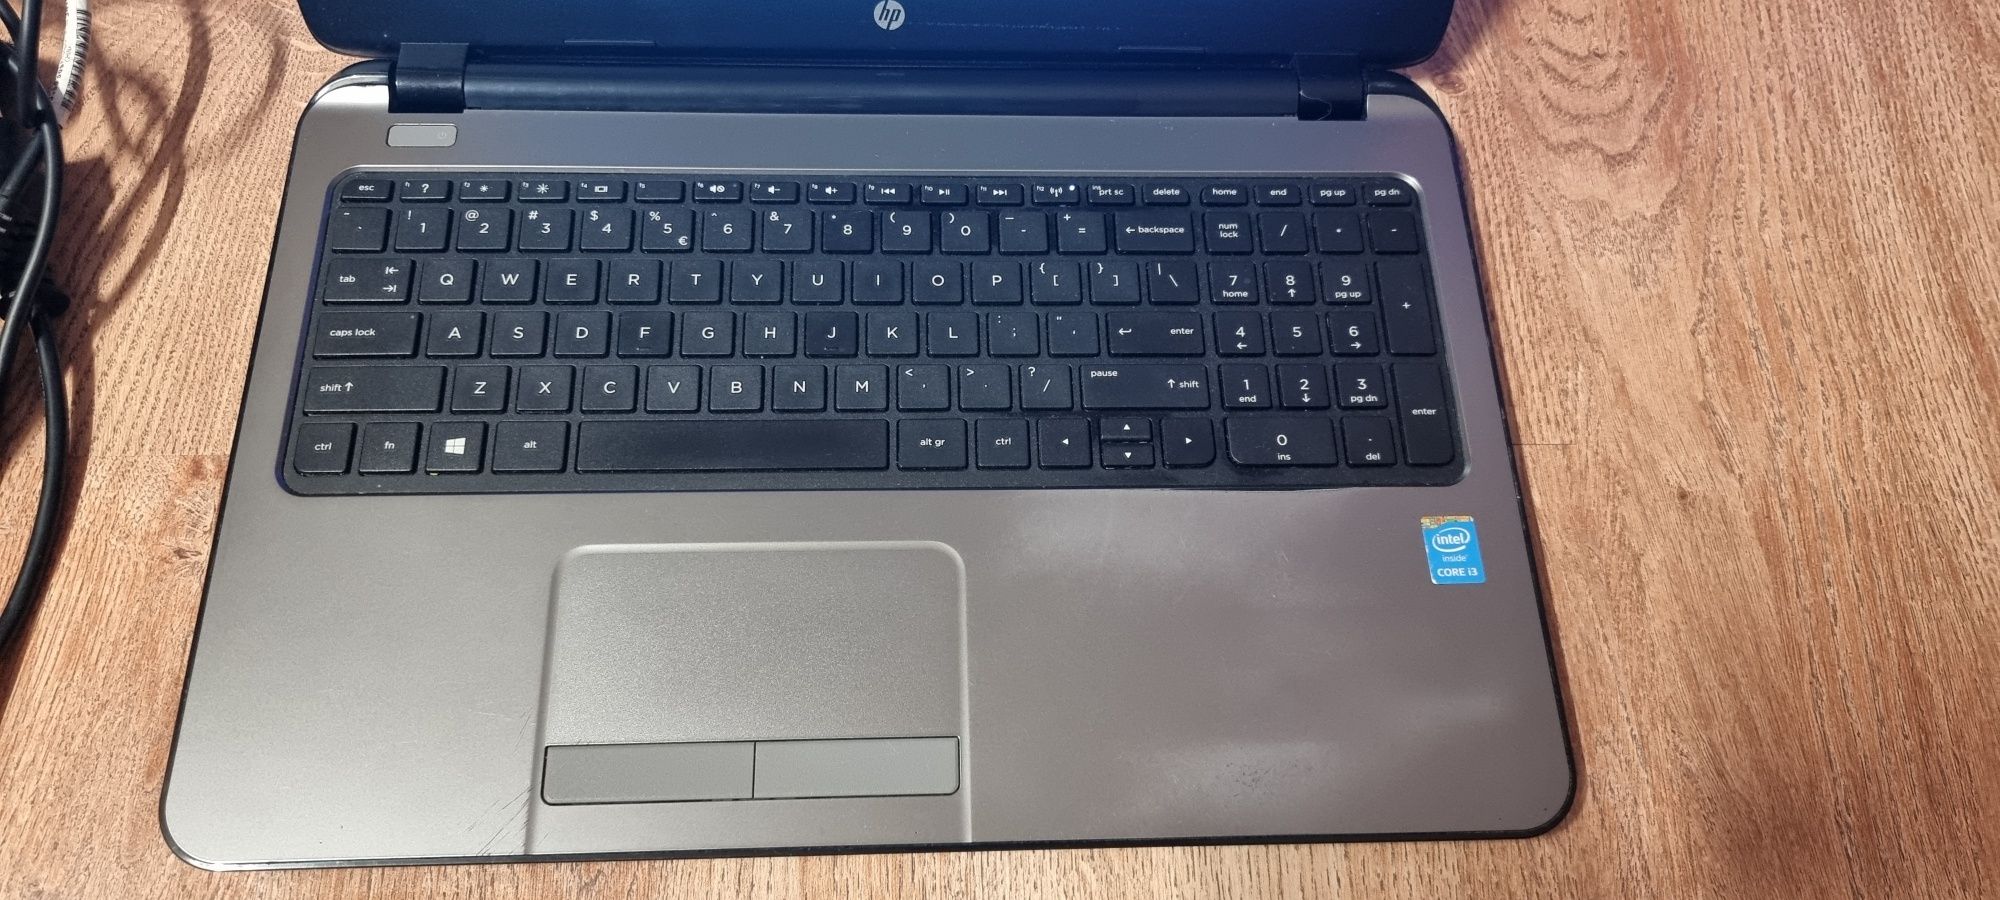 Laptop Hp 250 g3 Intel i3 ,4gb ram , 500gb